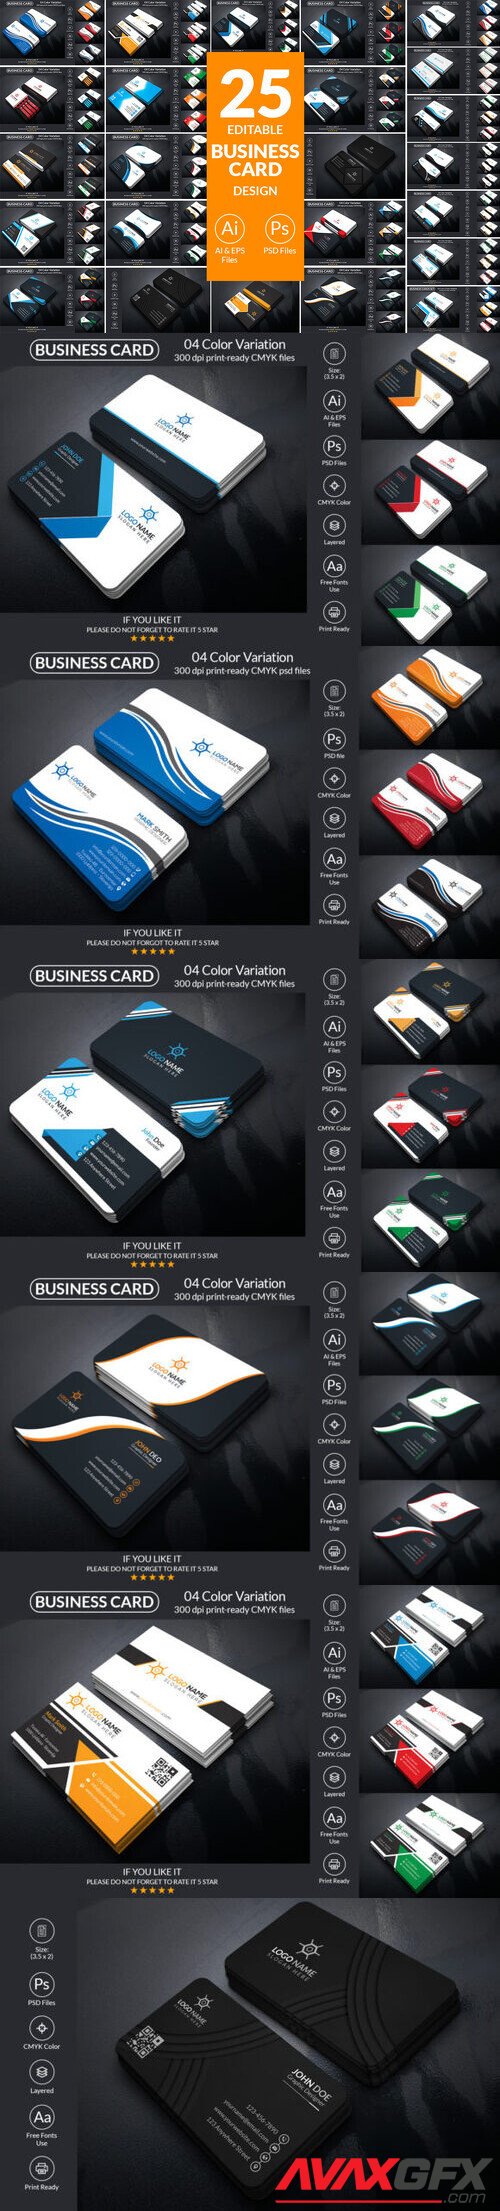 Business Card Bundle PSD